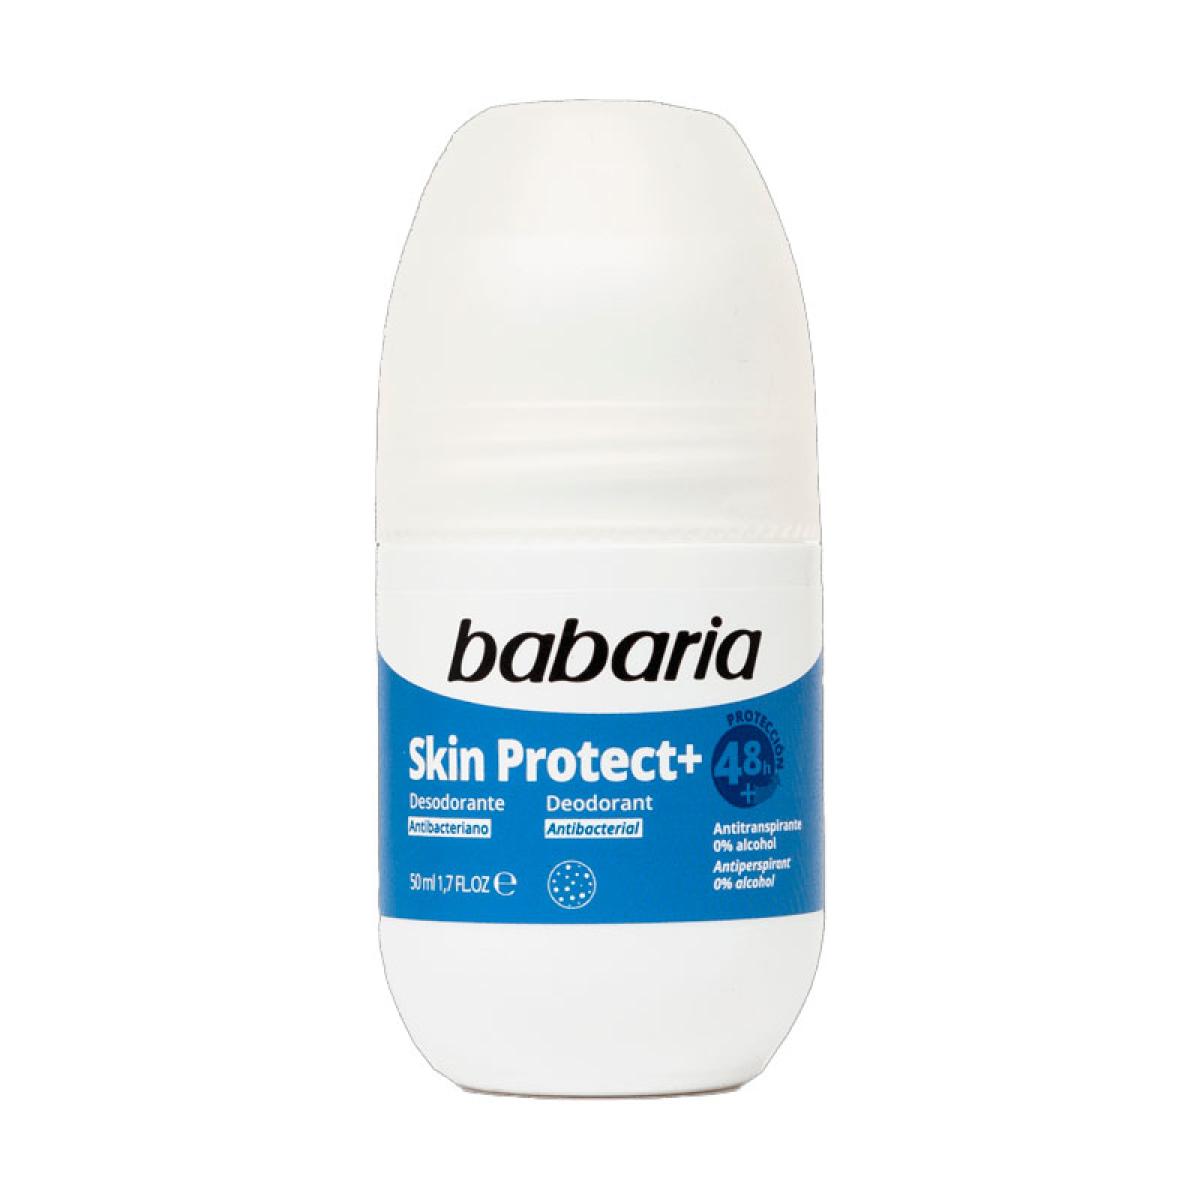  رول ضد تعریق مدل Skin Protect+ -  Skin Protect+ Roll-On Deodorant